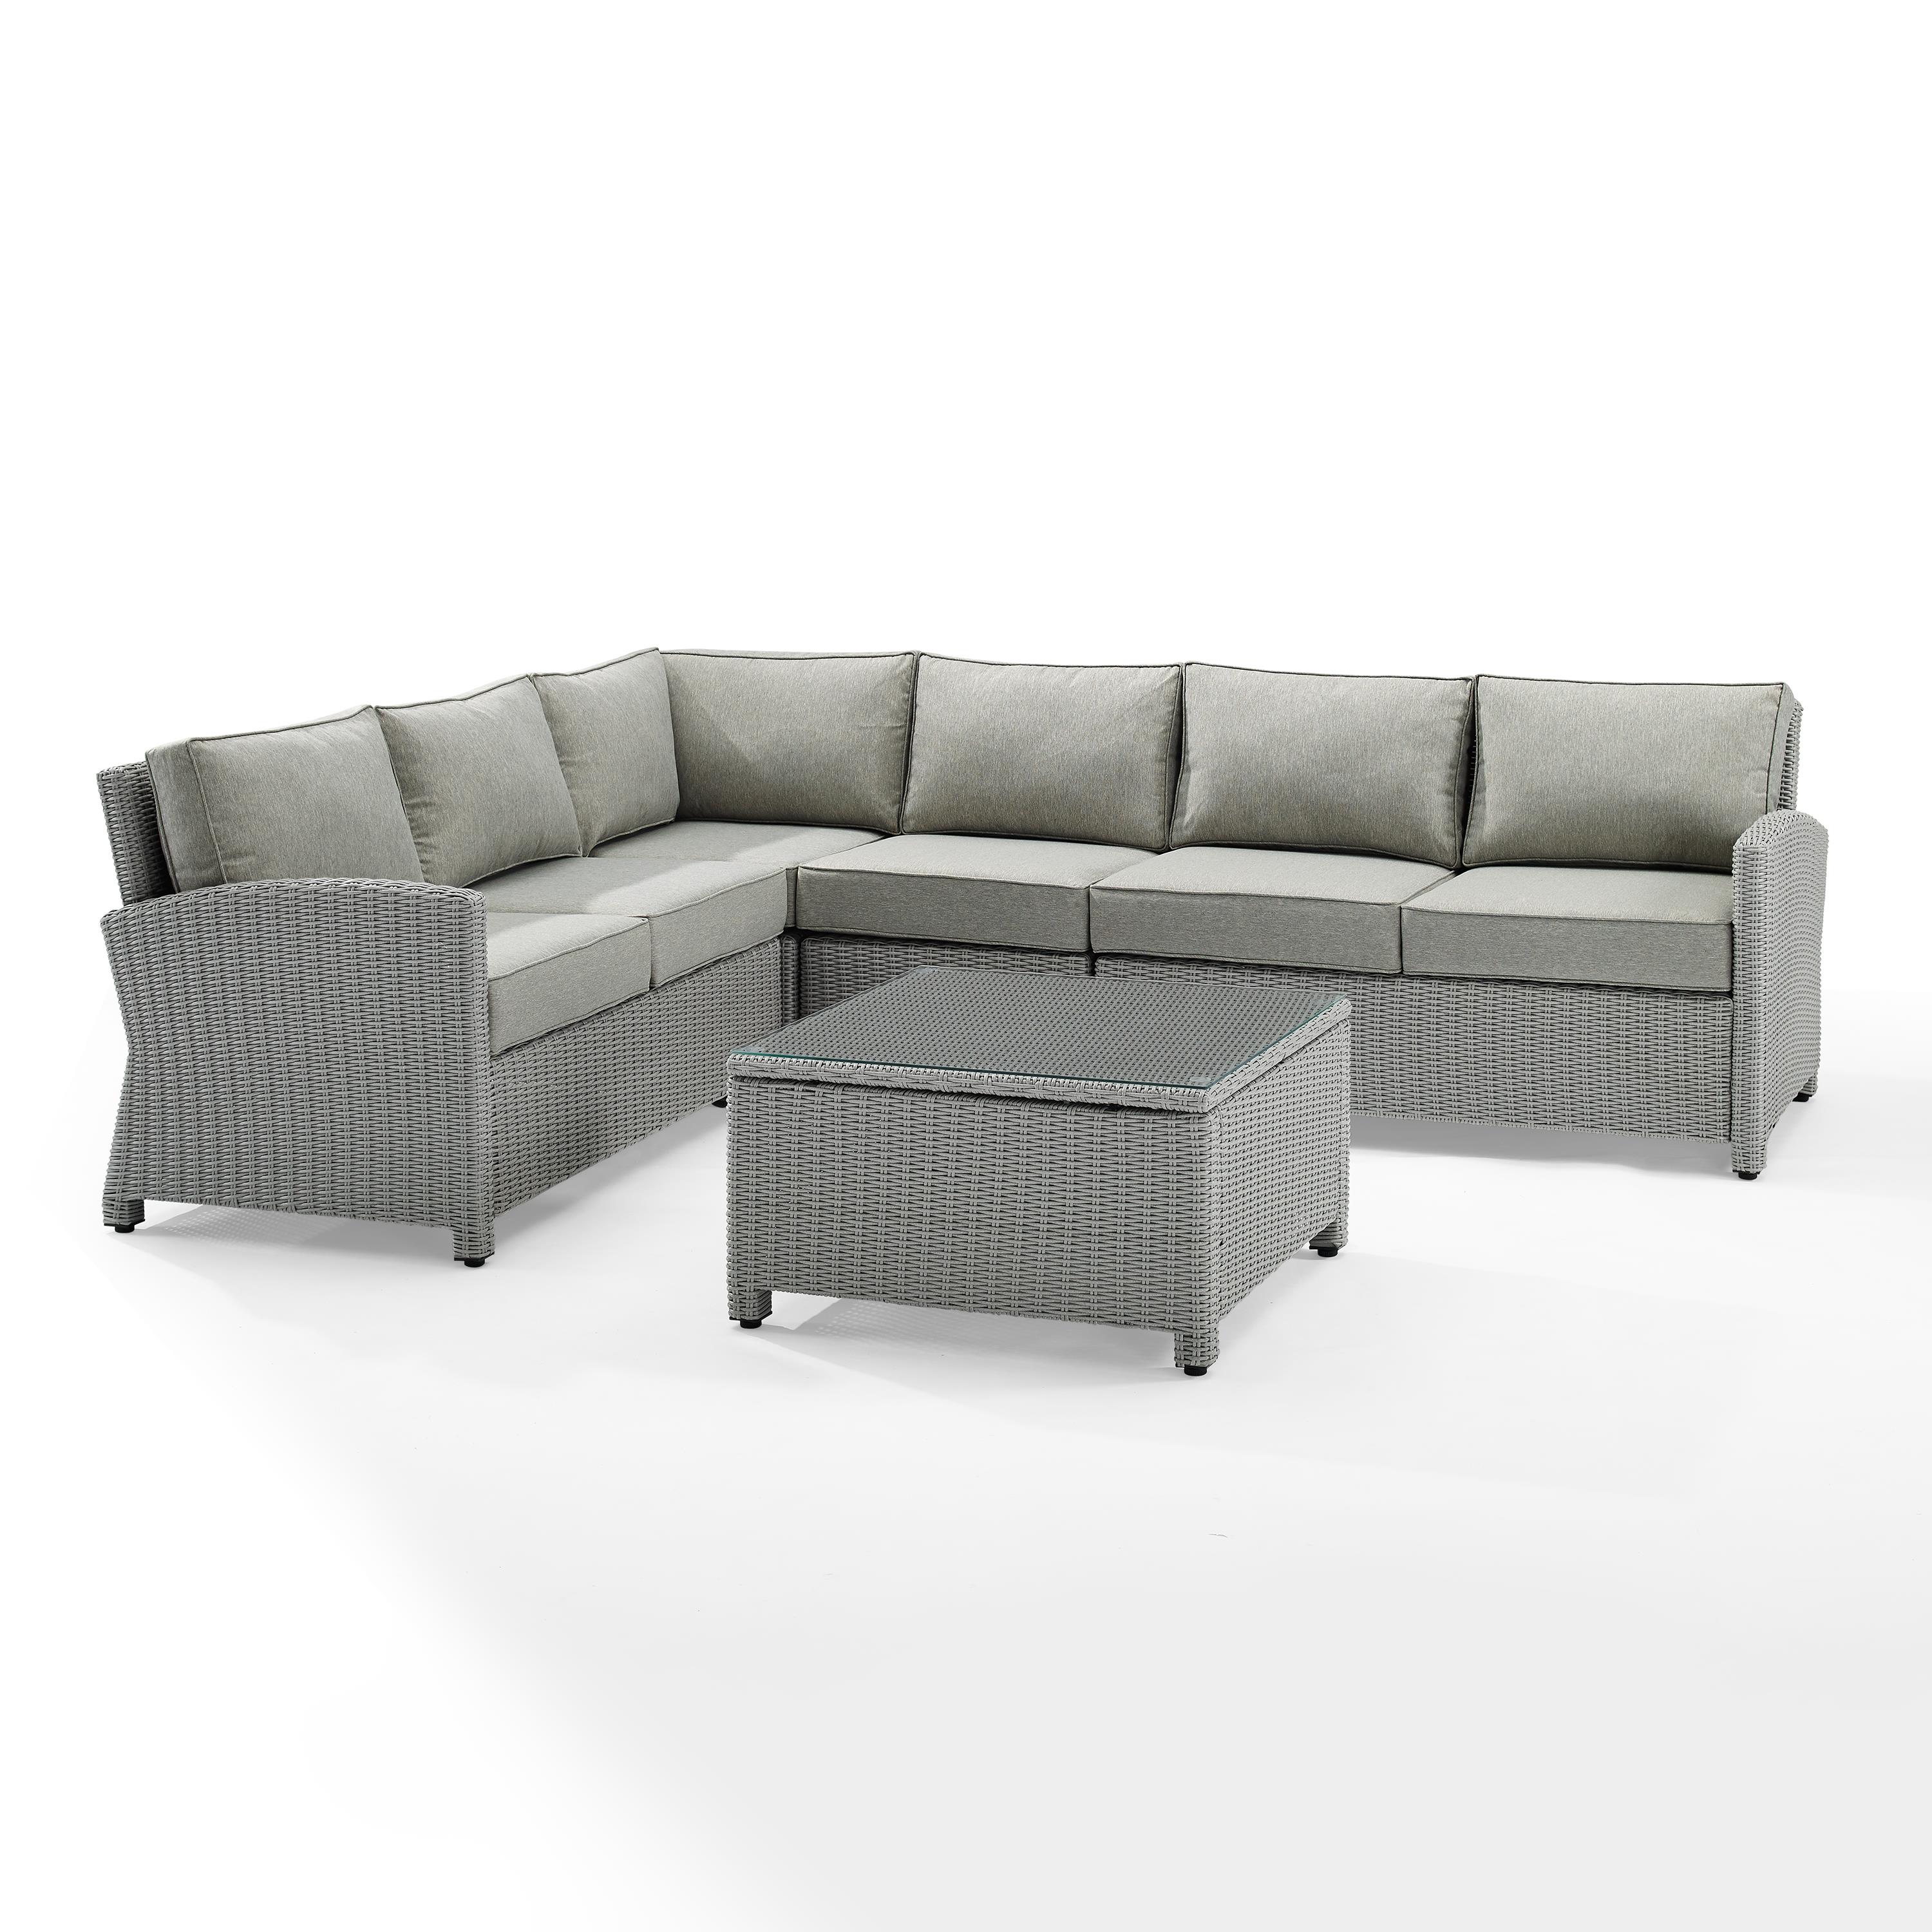 Crosley Furniture Bradenton 5-Piece Outdoor Sectional Sofa Wicker Conversation Patio Furniture Set for Deck - image 2 of 9